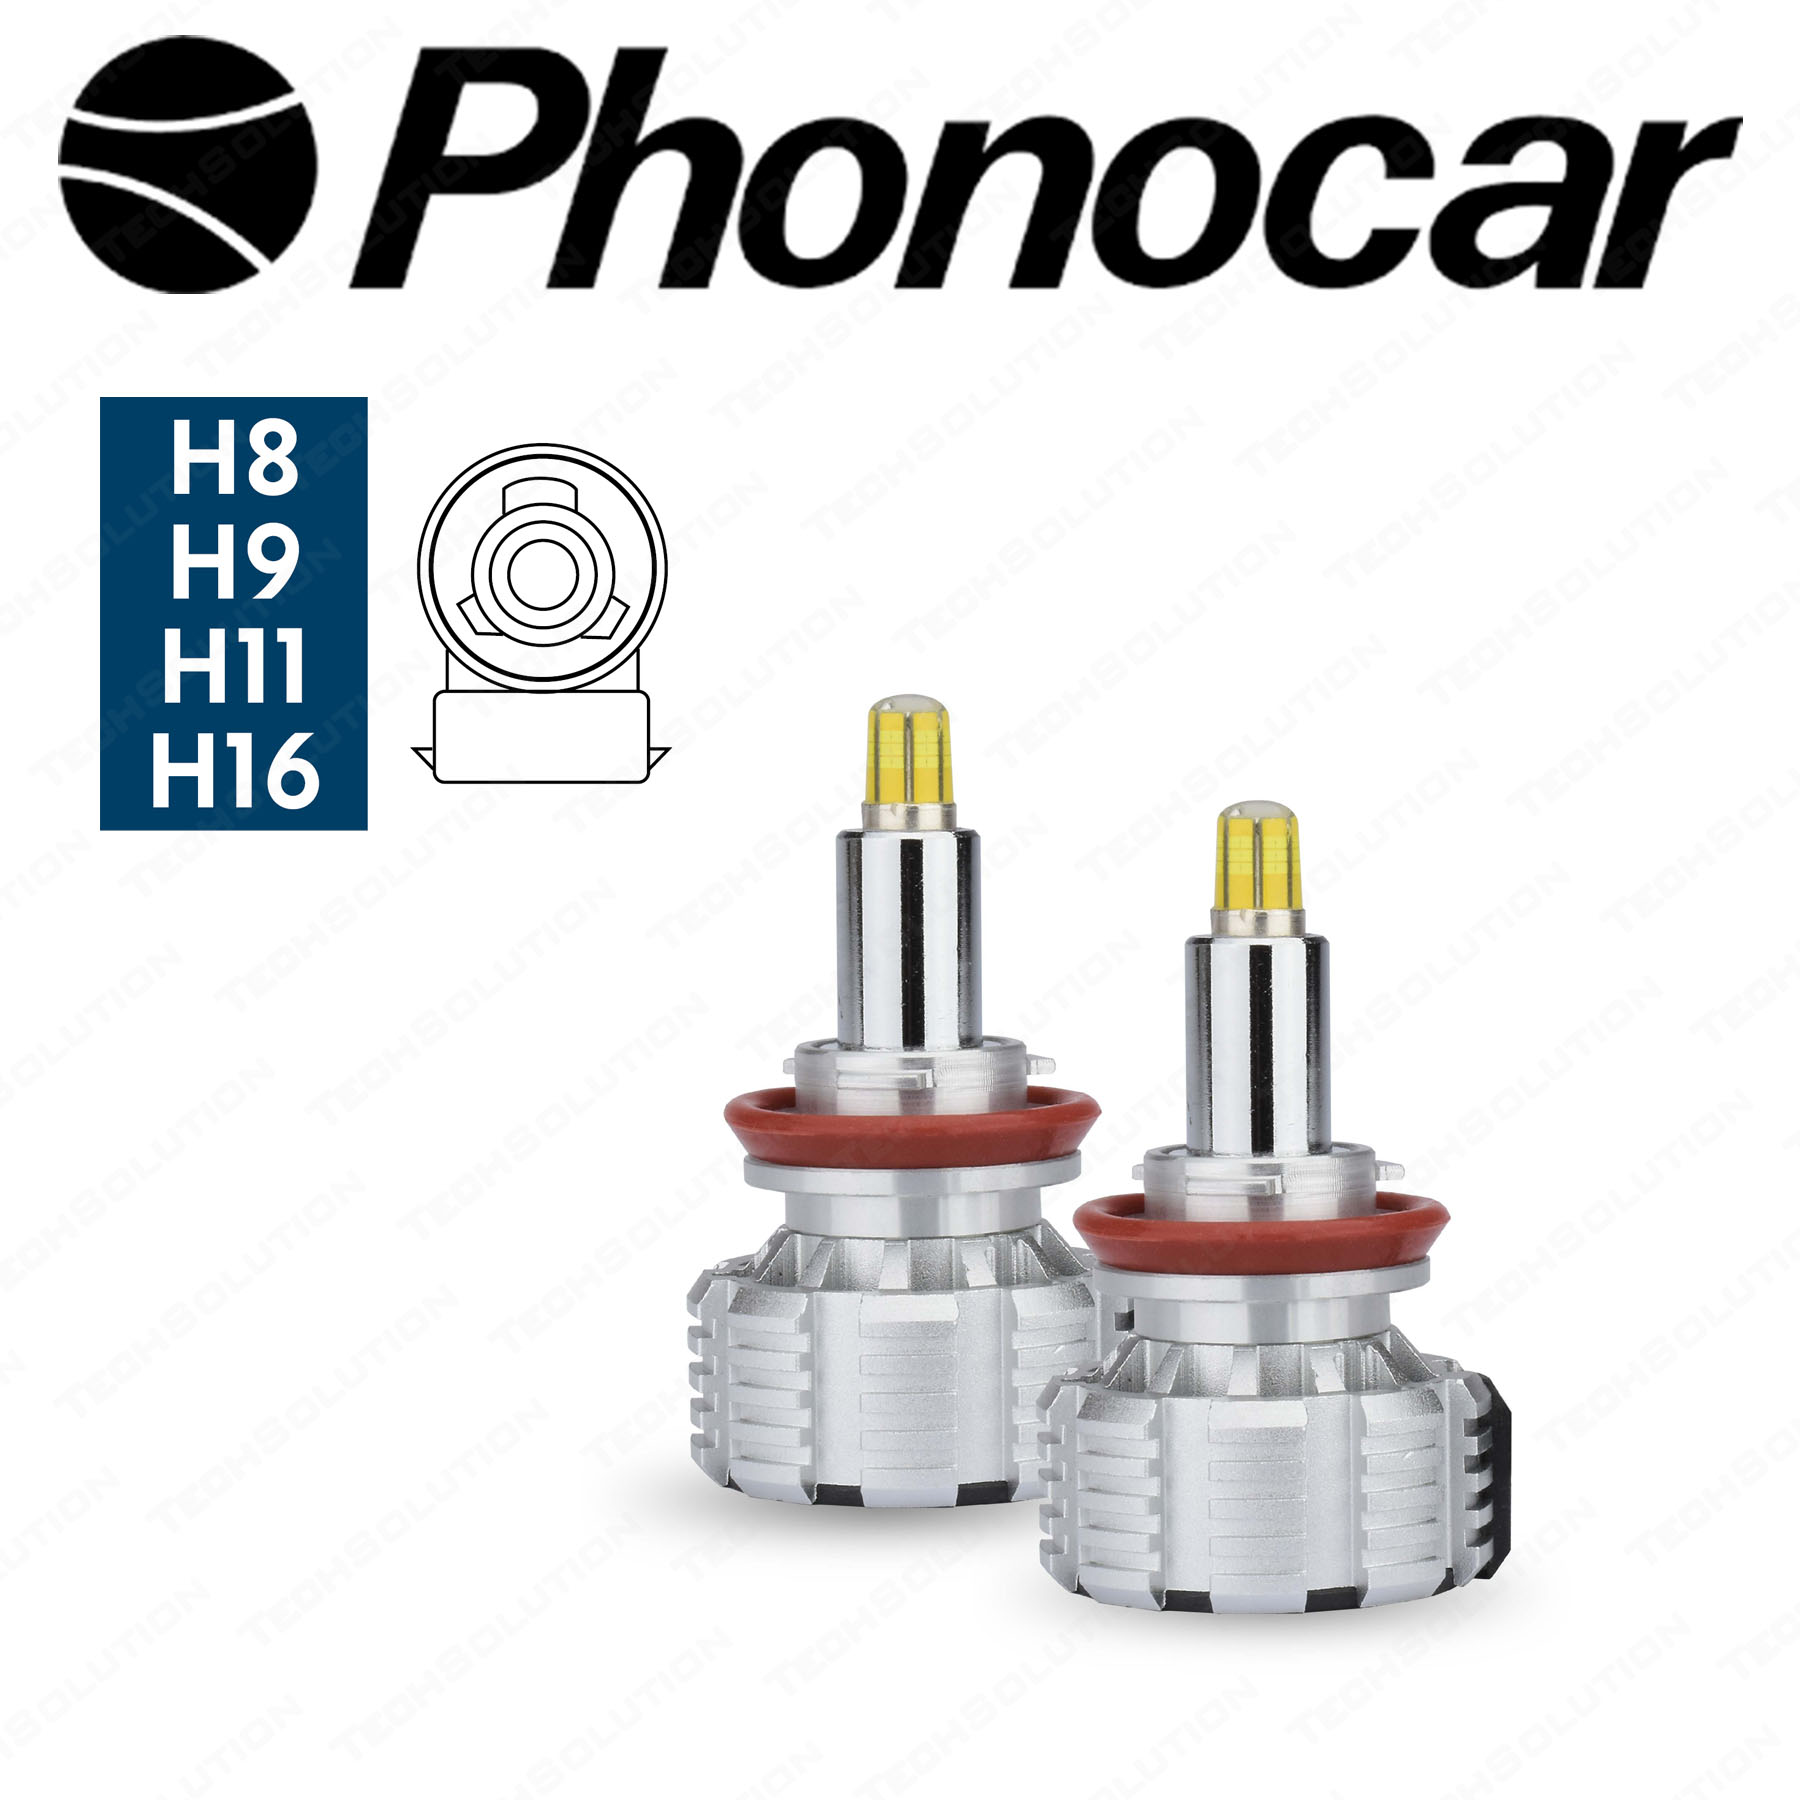 Phonocar 07543 Lampada Led H7 per fari Lenticolari - Tech Solution